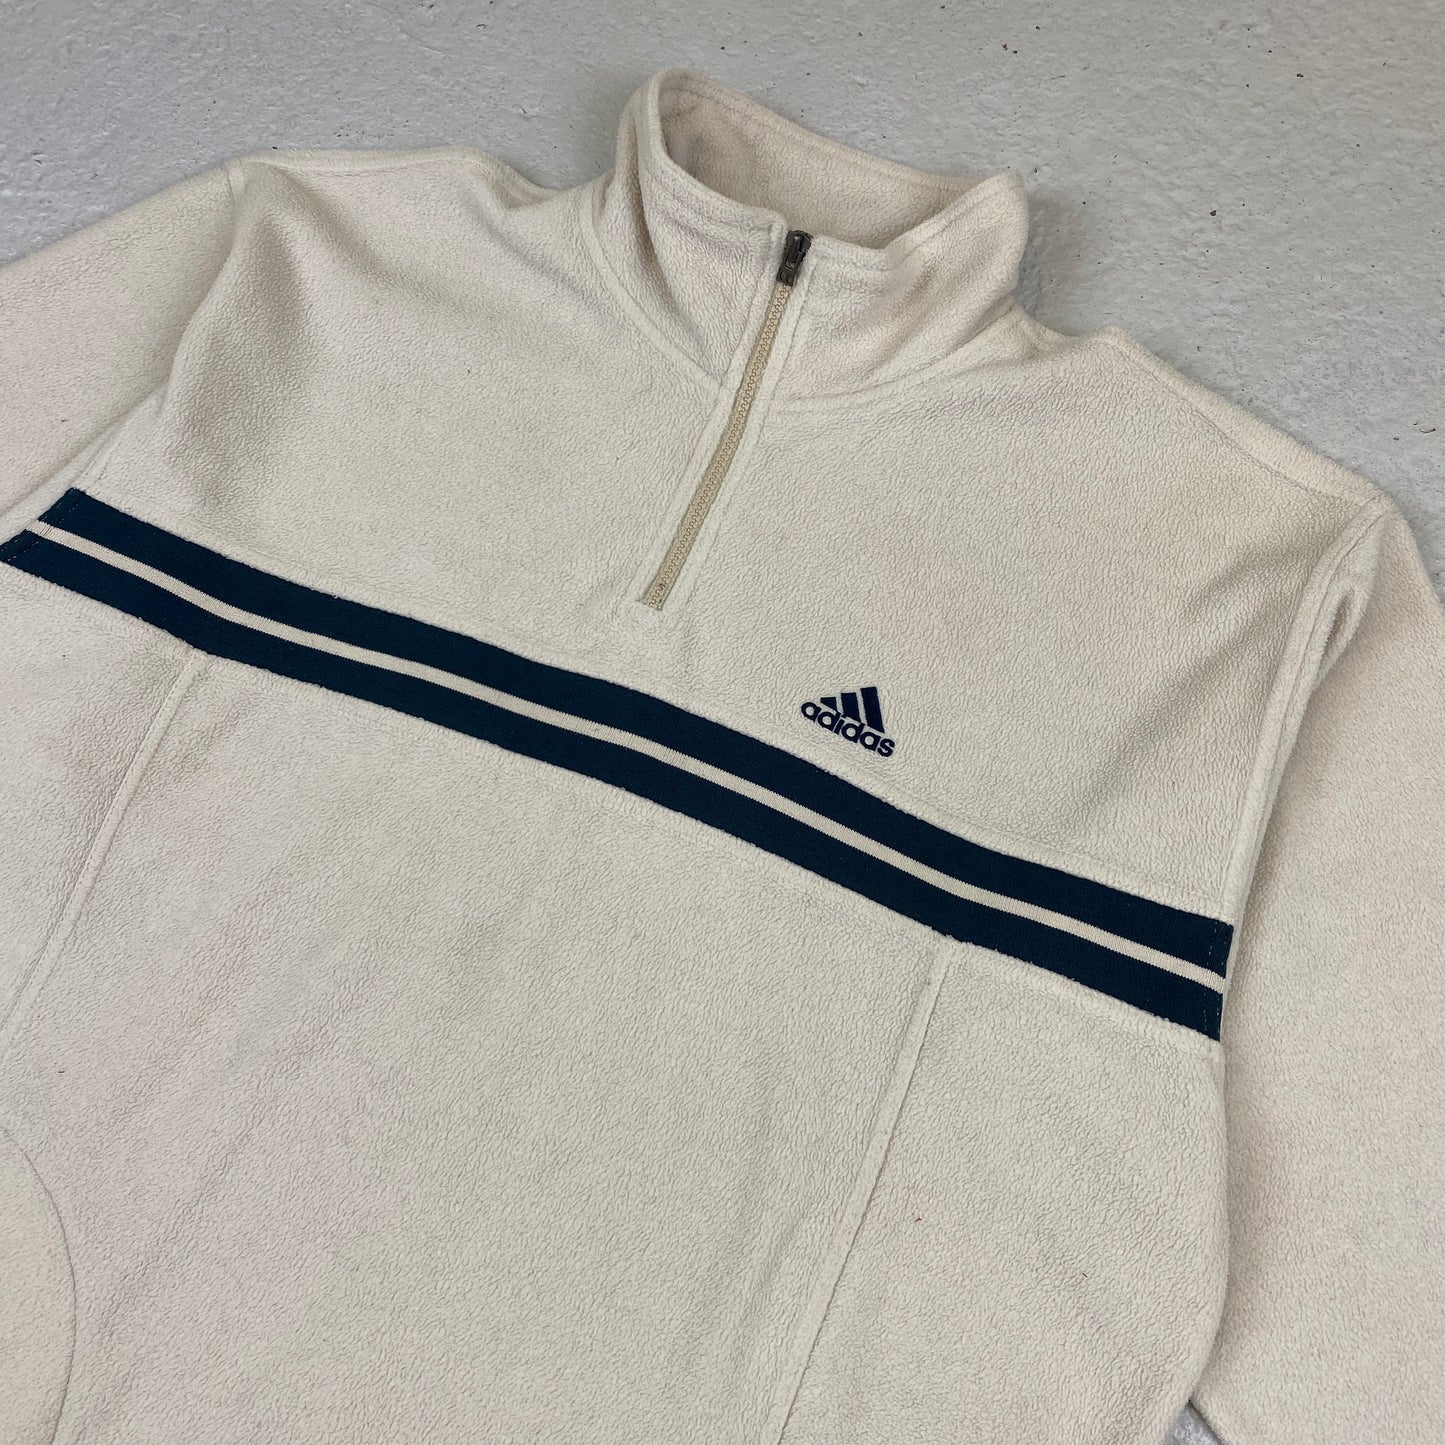 Adidas embroidered 1/4 zip fleece sweater (XL-XXL)